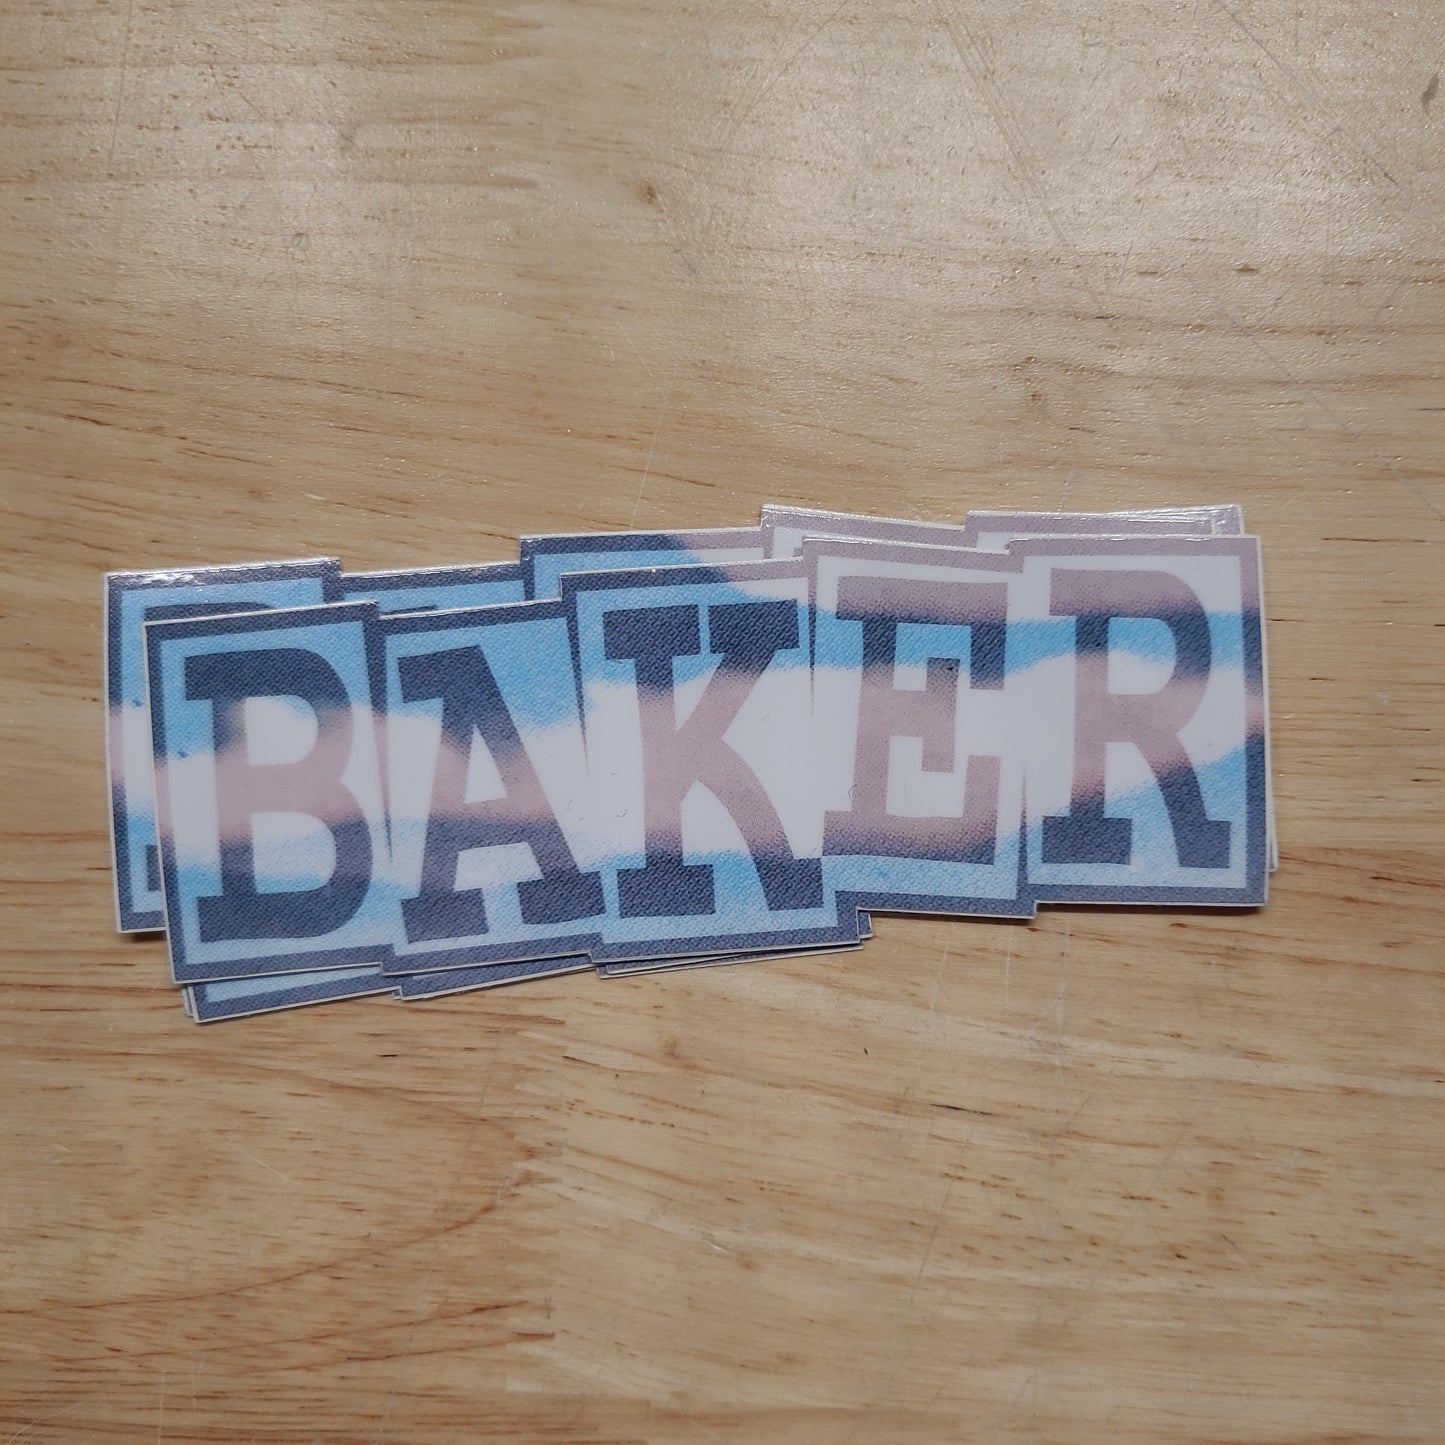 Baker - Ribbon Logo 5.0" Stickers